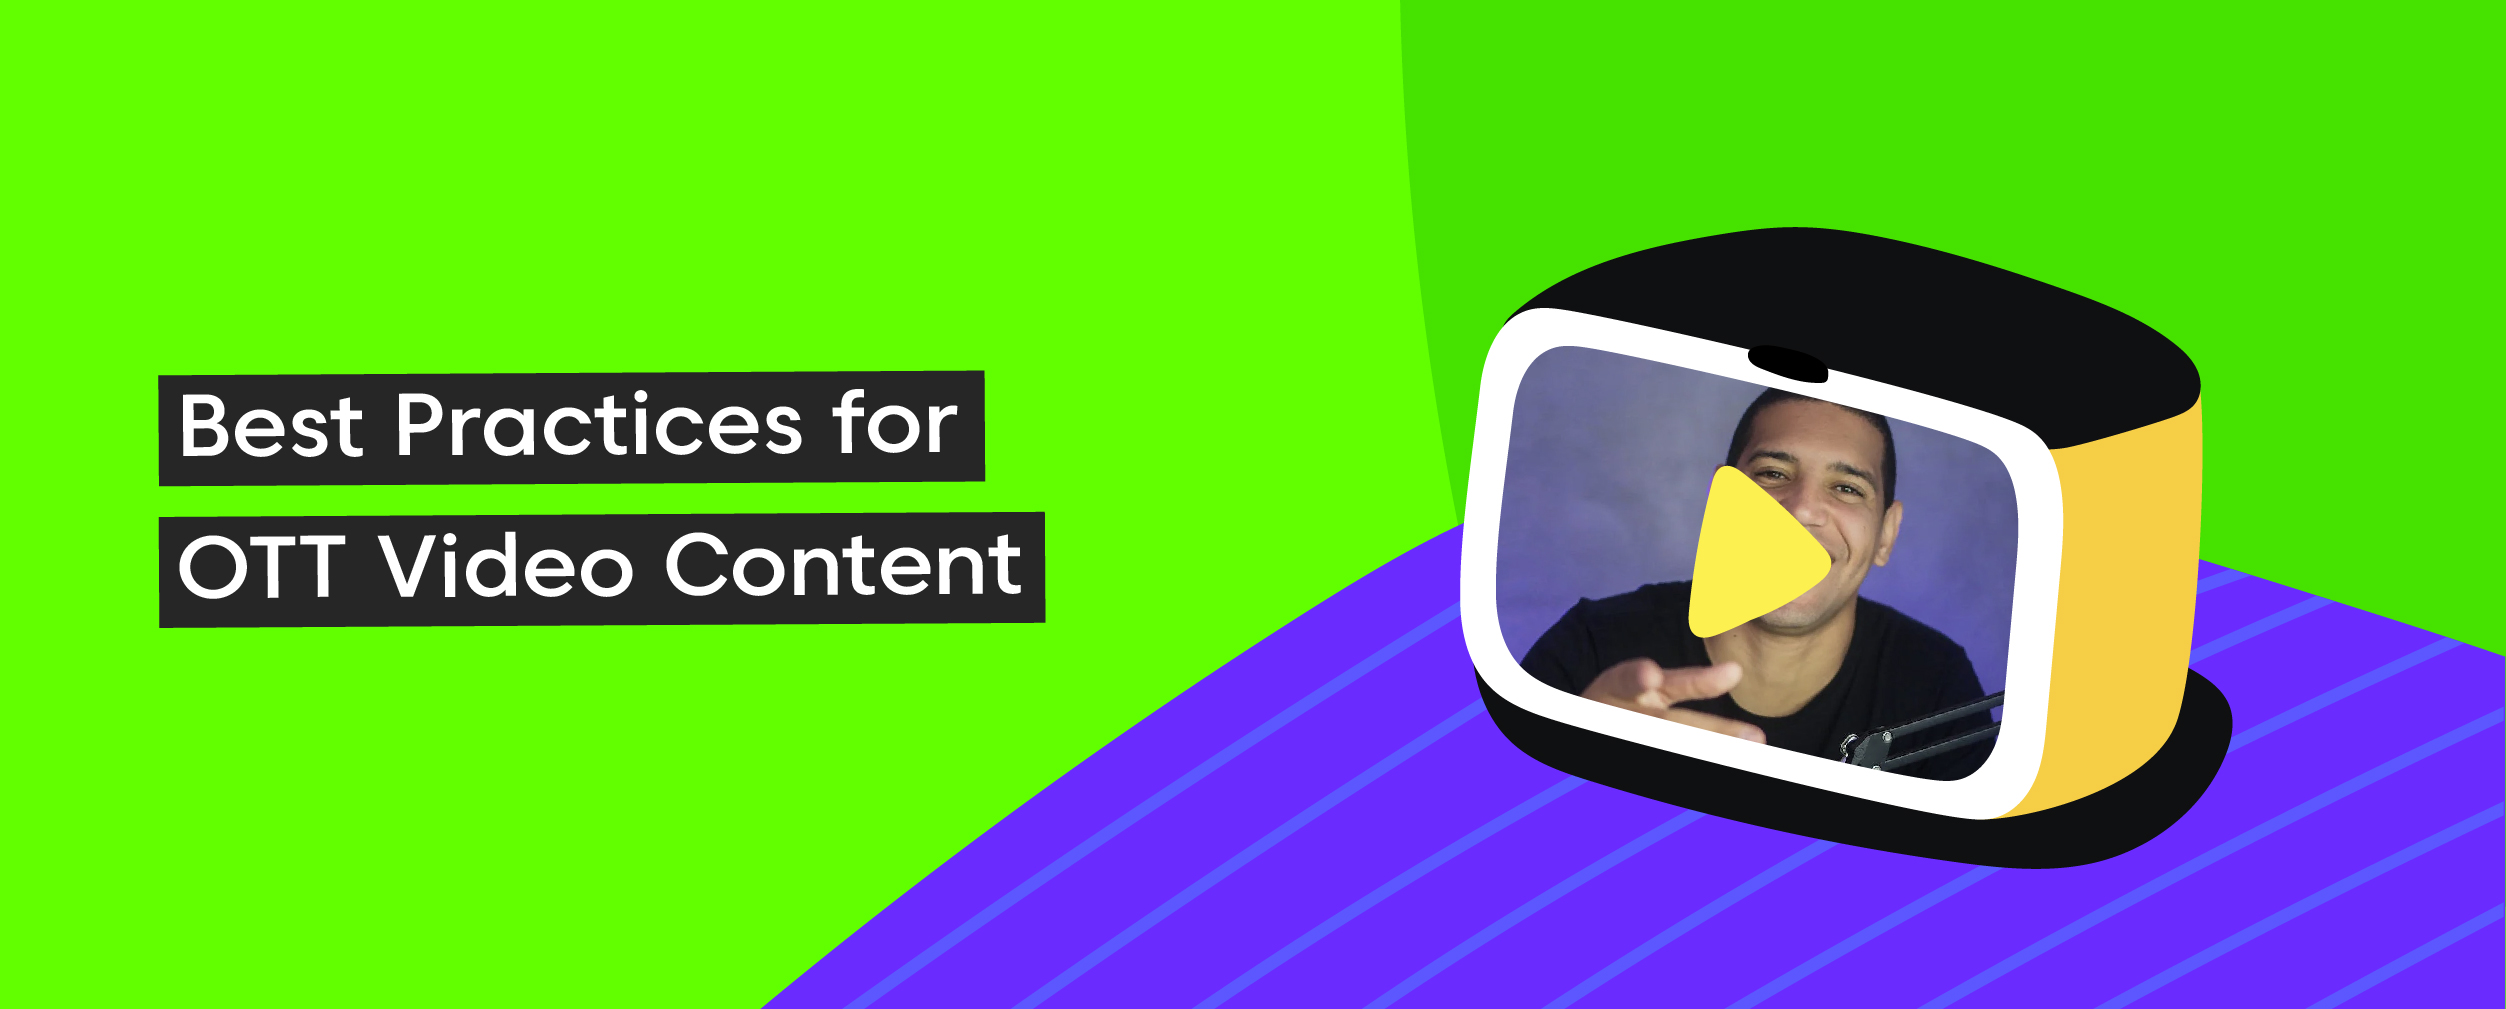 Best Practices for OTT Video Content